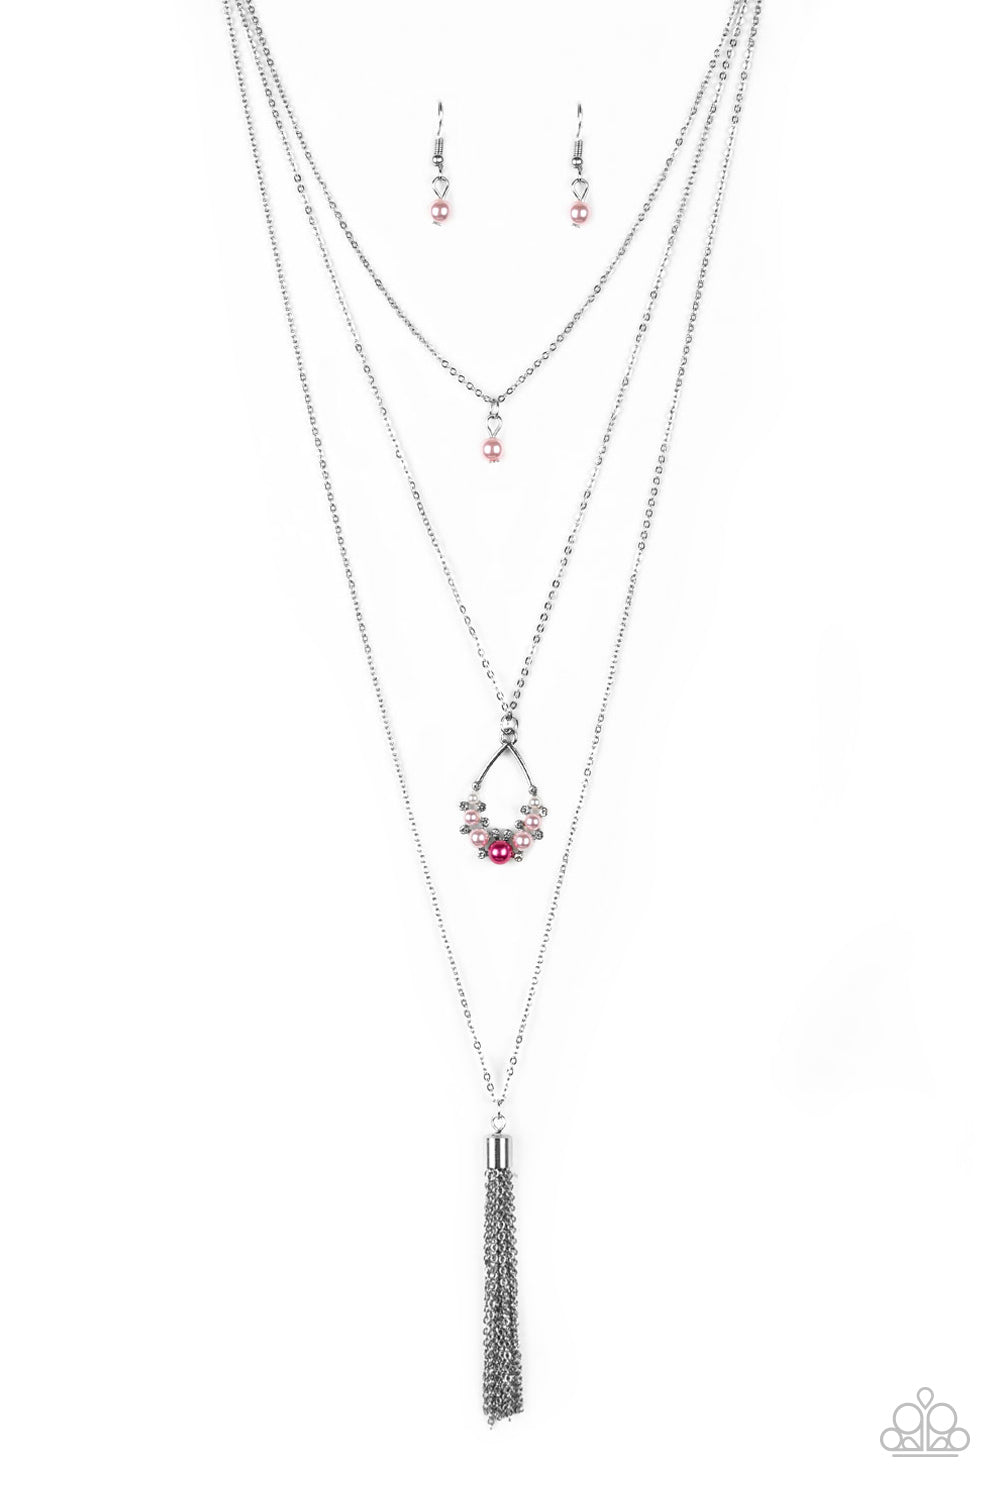 Be Fancy - Multi (Pink Pearl) Necklace freeshipping - JewLz4u Gemstone Gallery